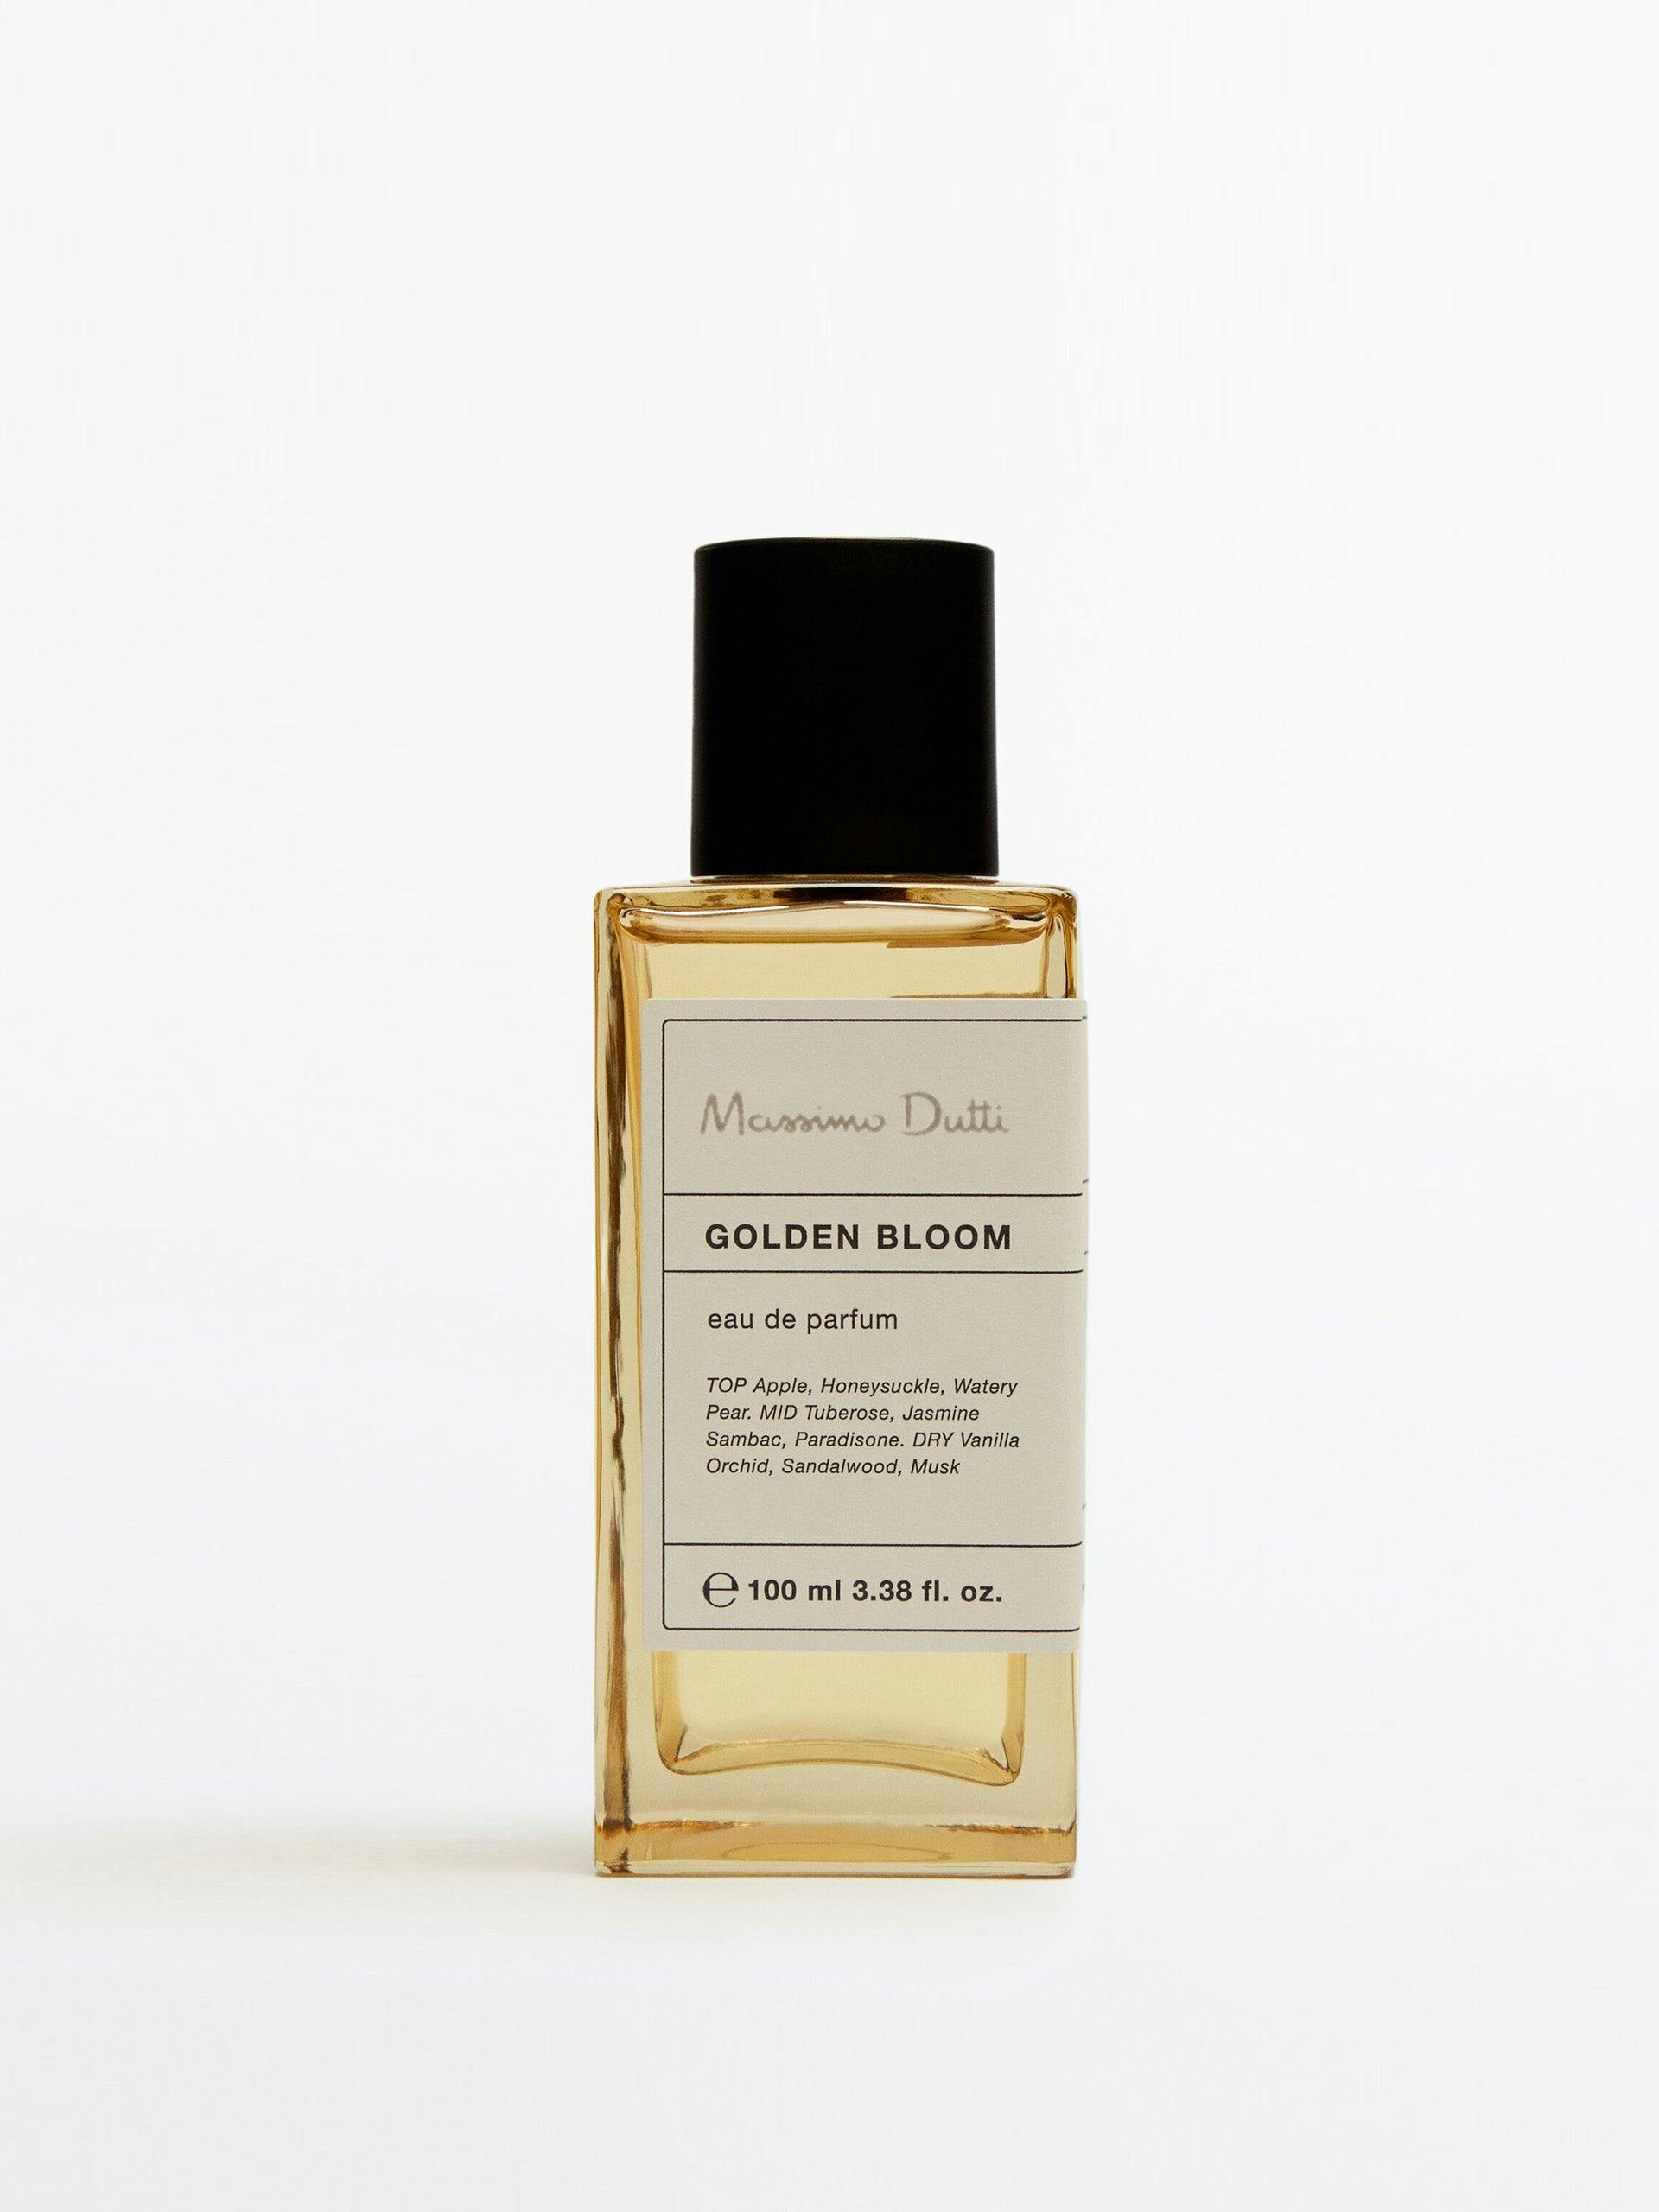 Golden Bloom eau de parfum